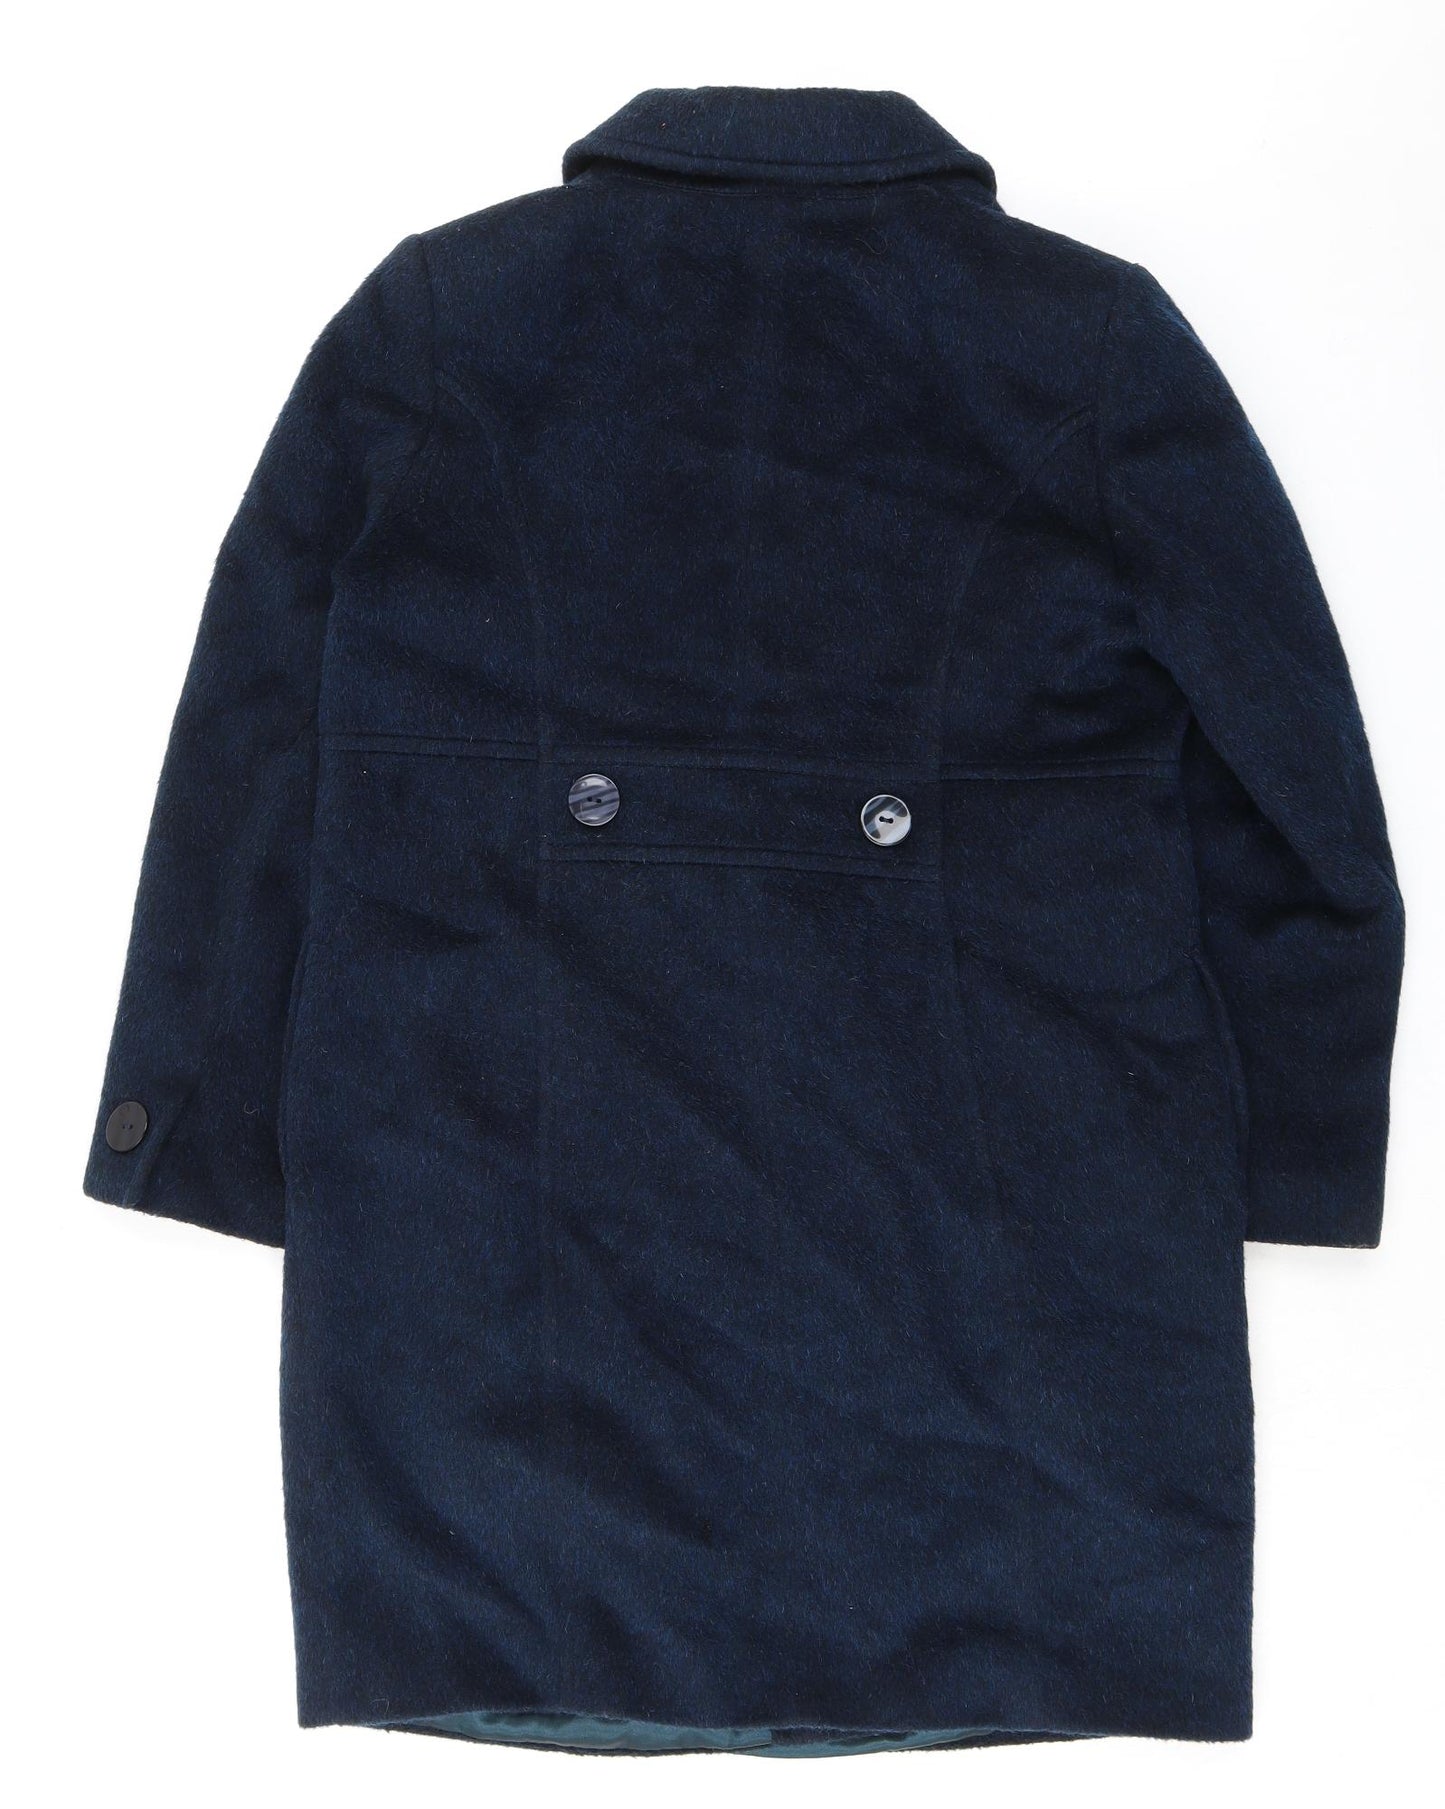 Precis Womens Blue Overcoat Coat Size 14 Button - Textured